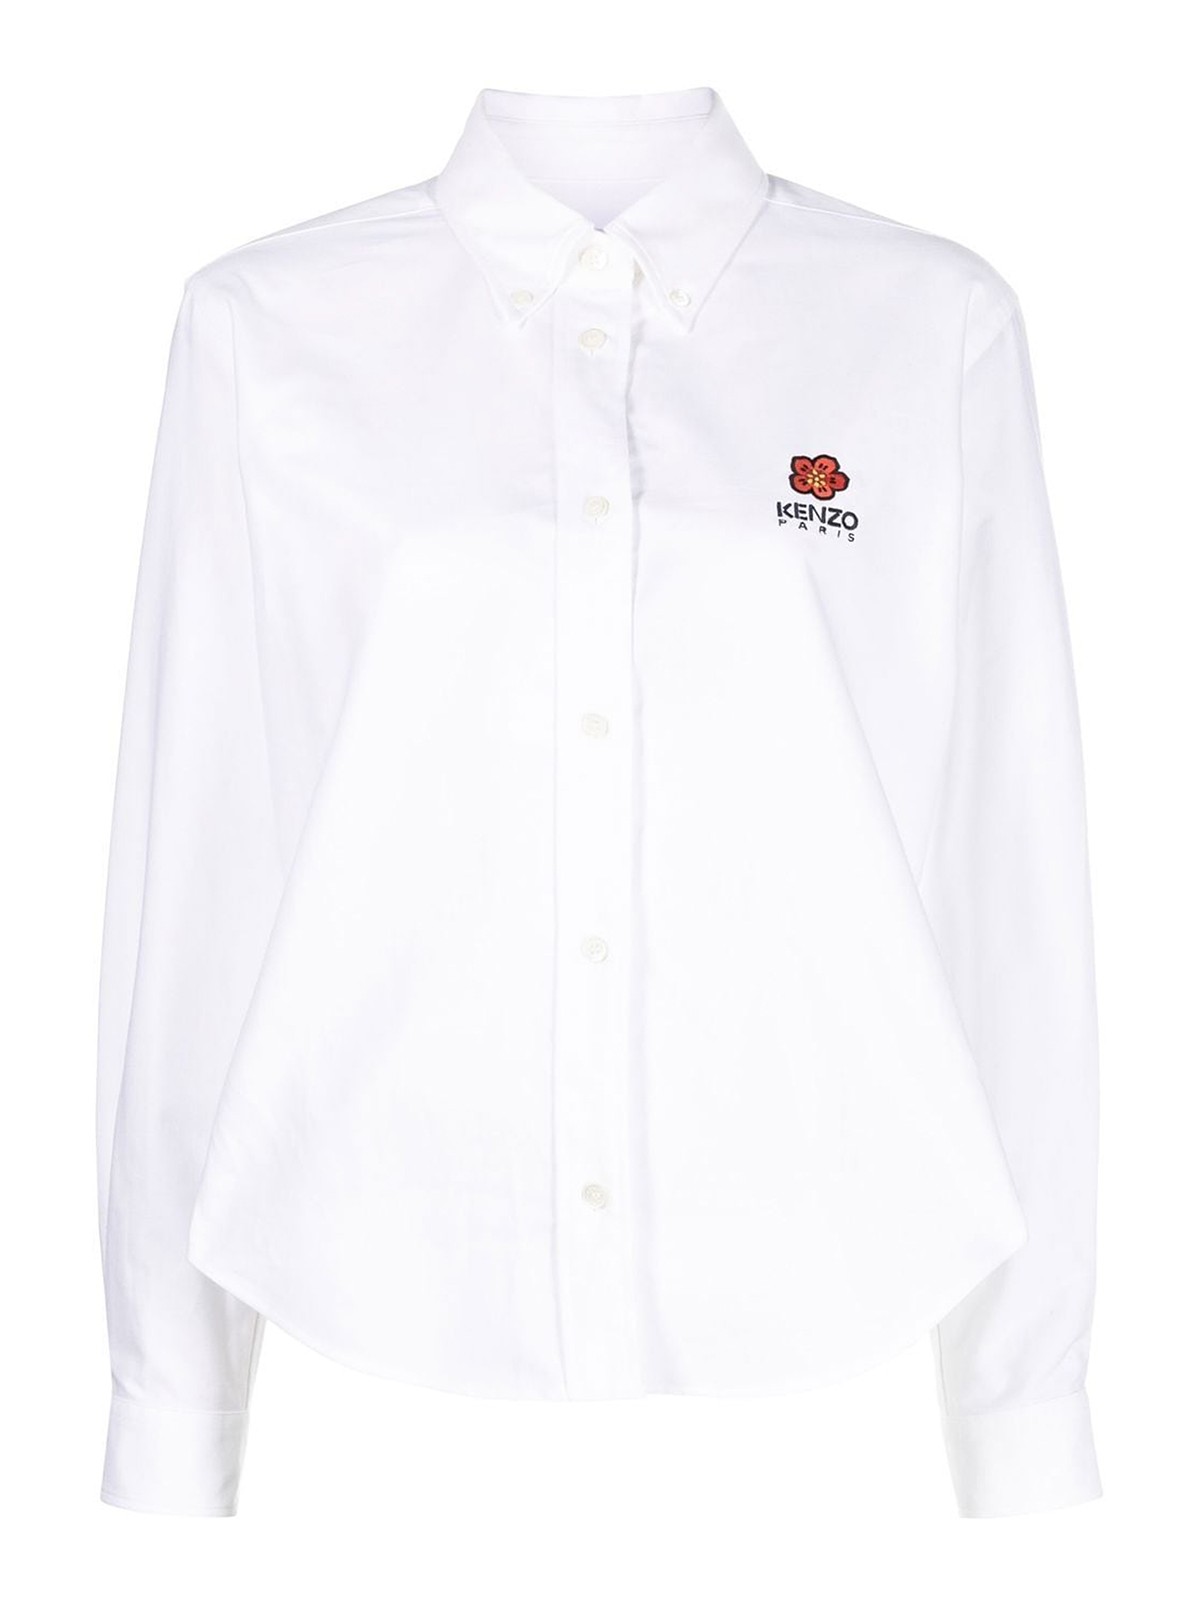 Kenzo White Cotton Shirt